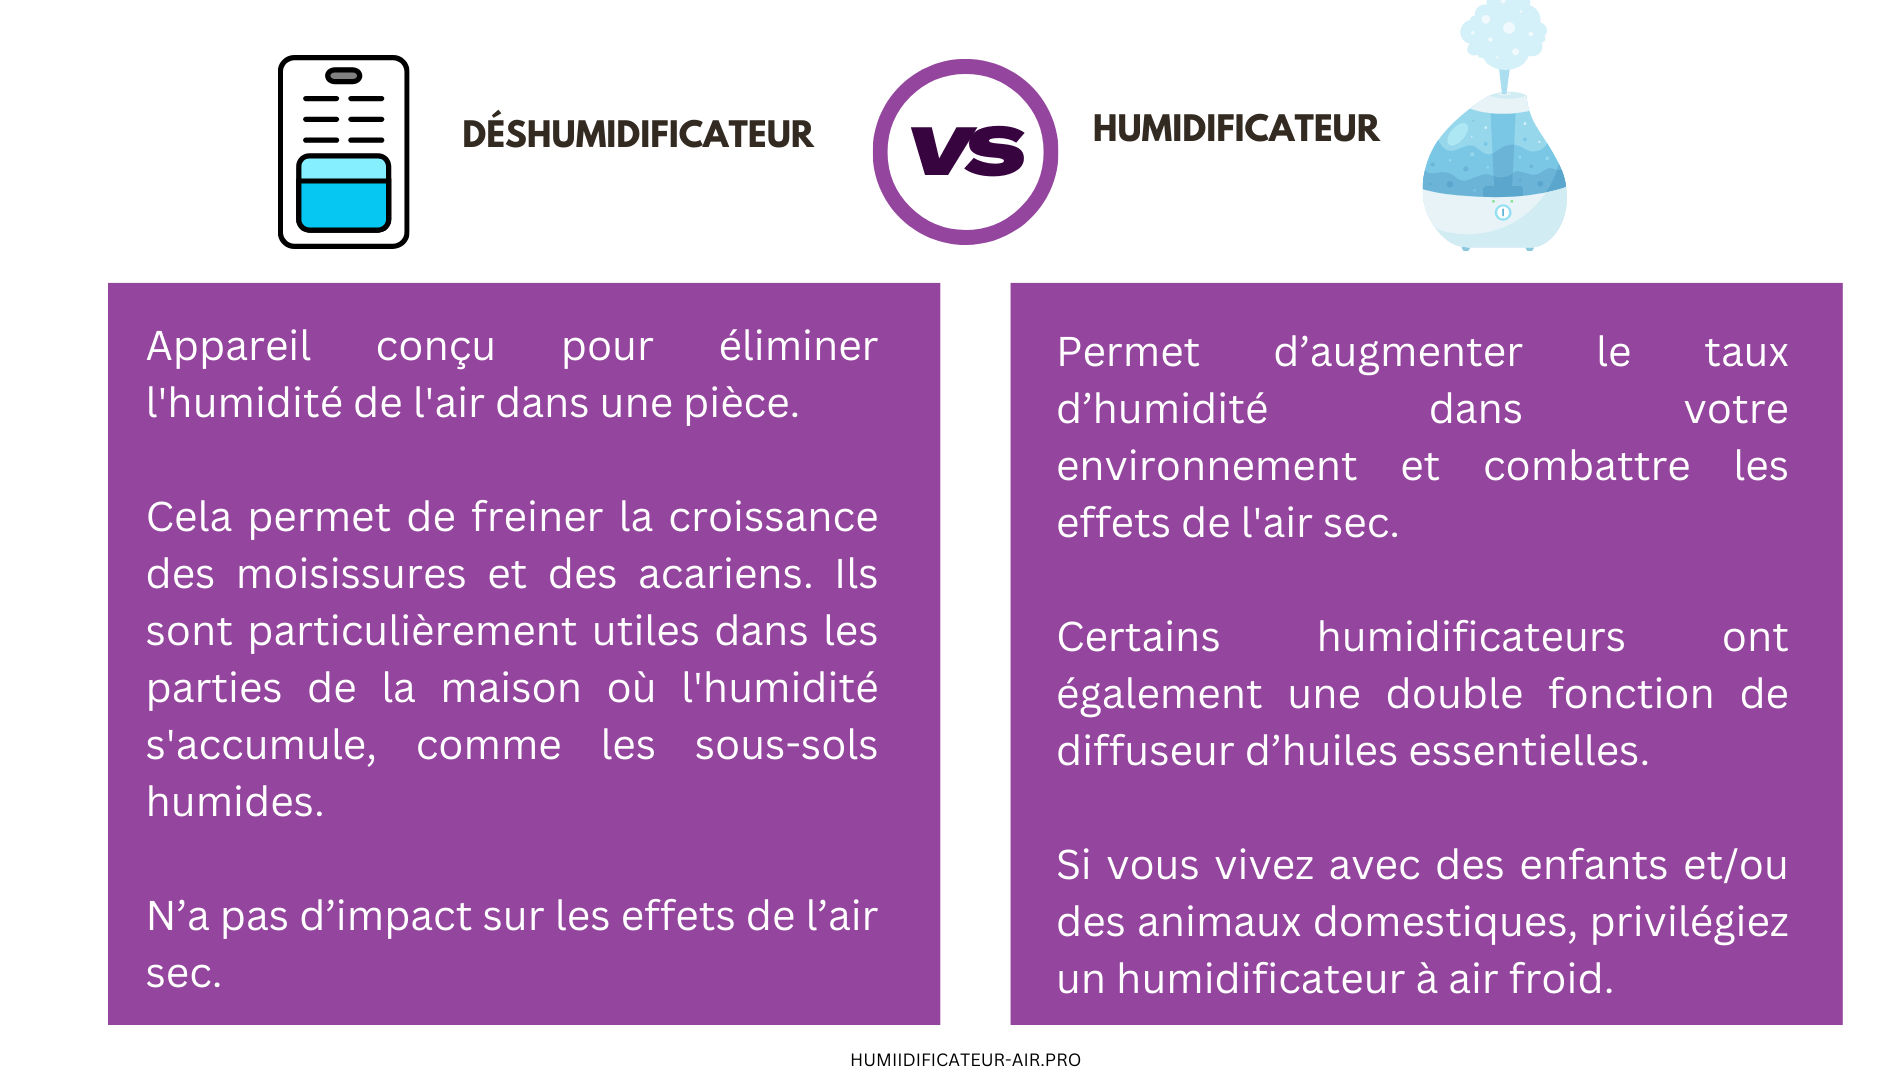 Humidificateur vs Deshumidificateur